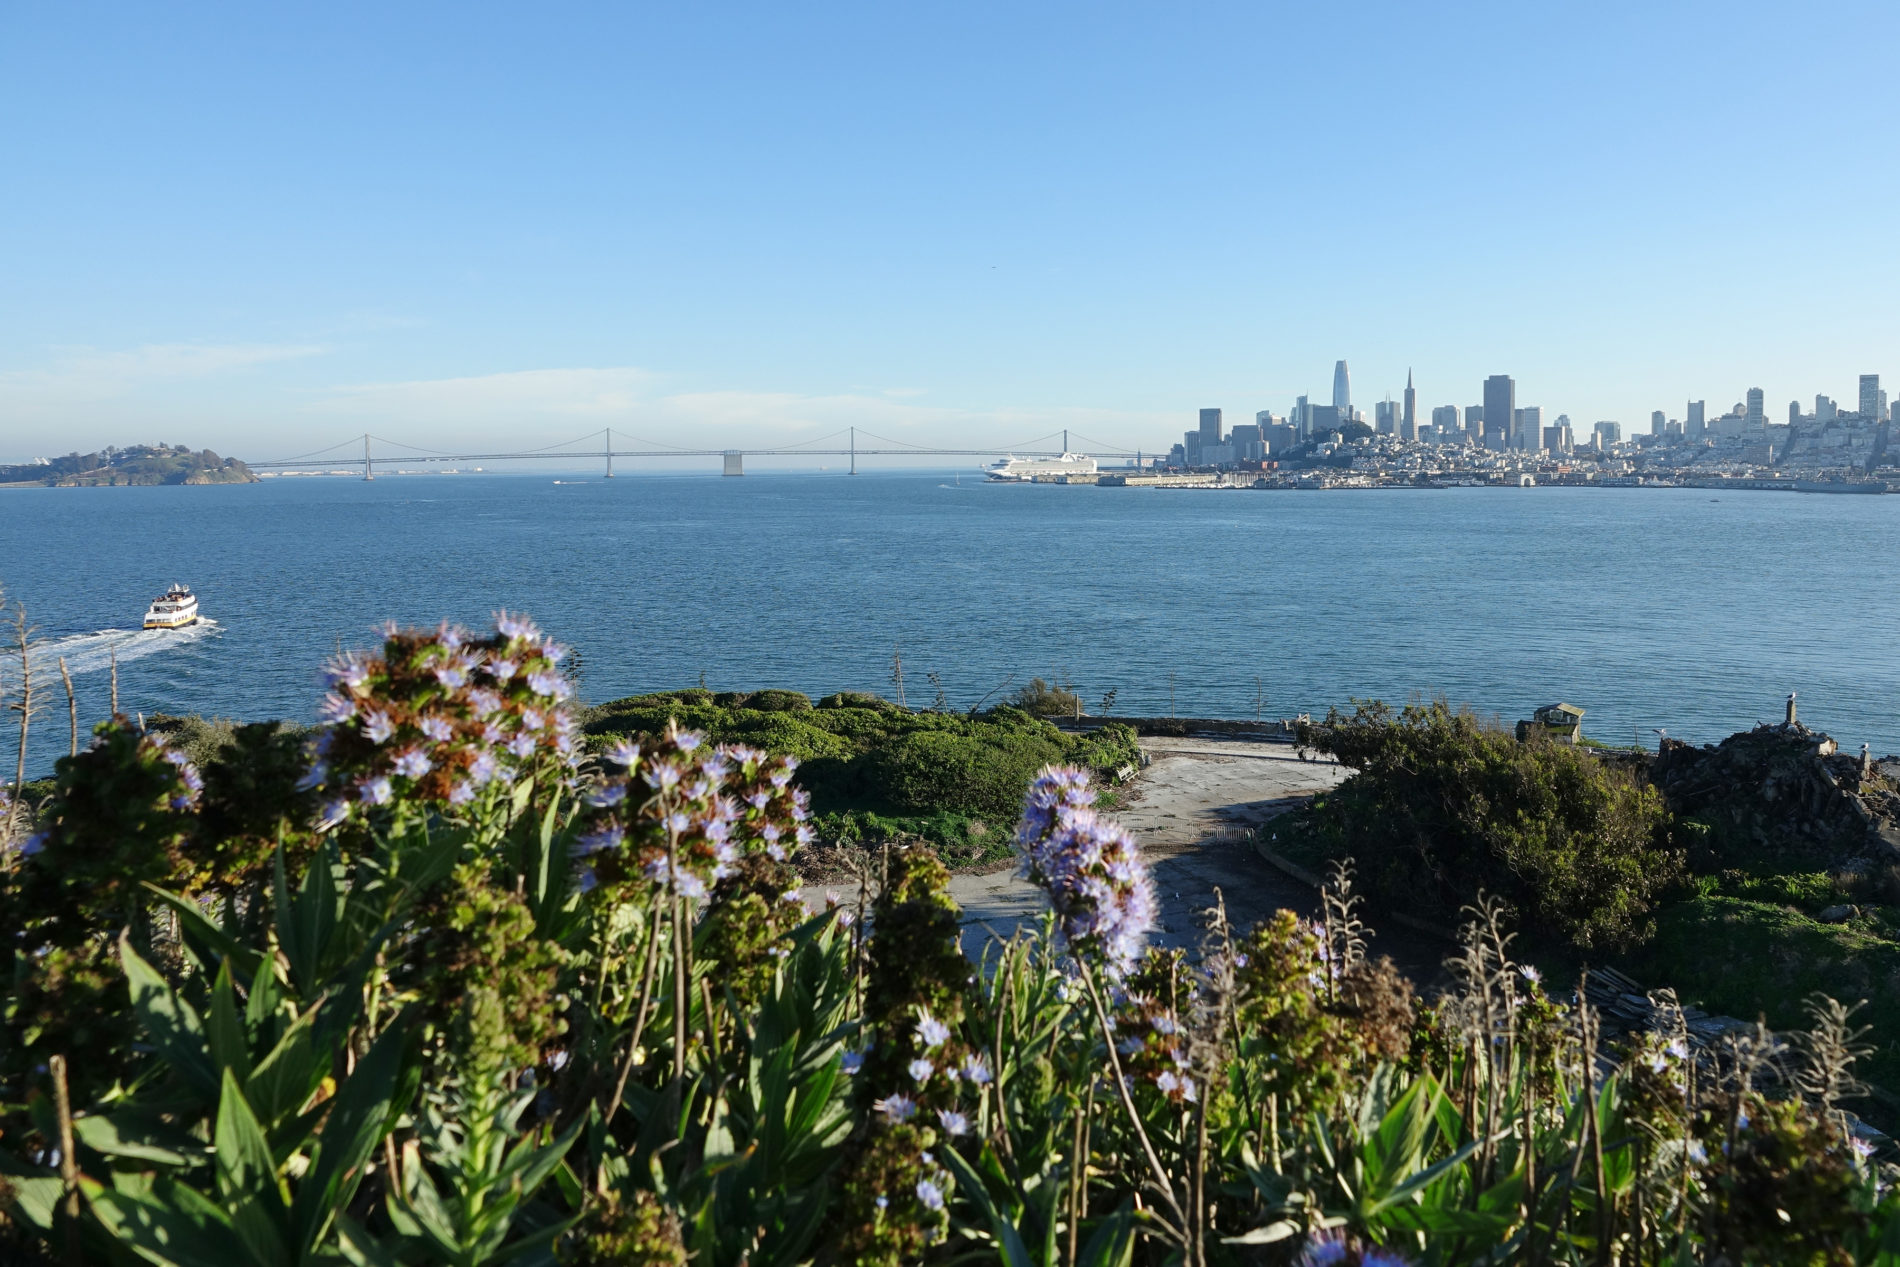 San Francisco Bay and city skyline viewed from Alcatraz Island.